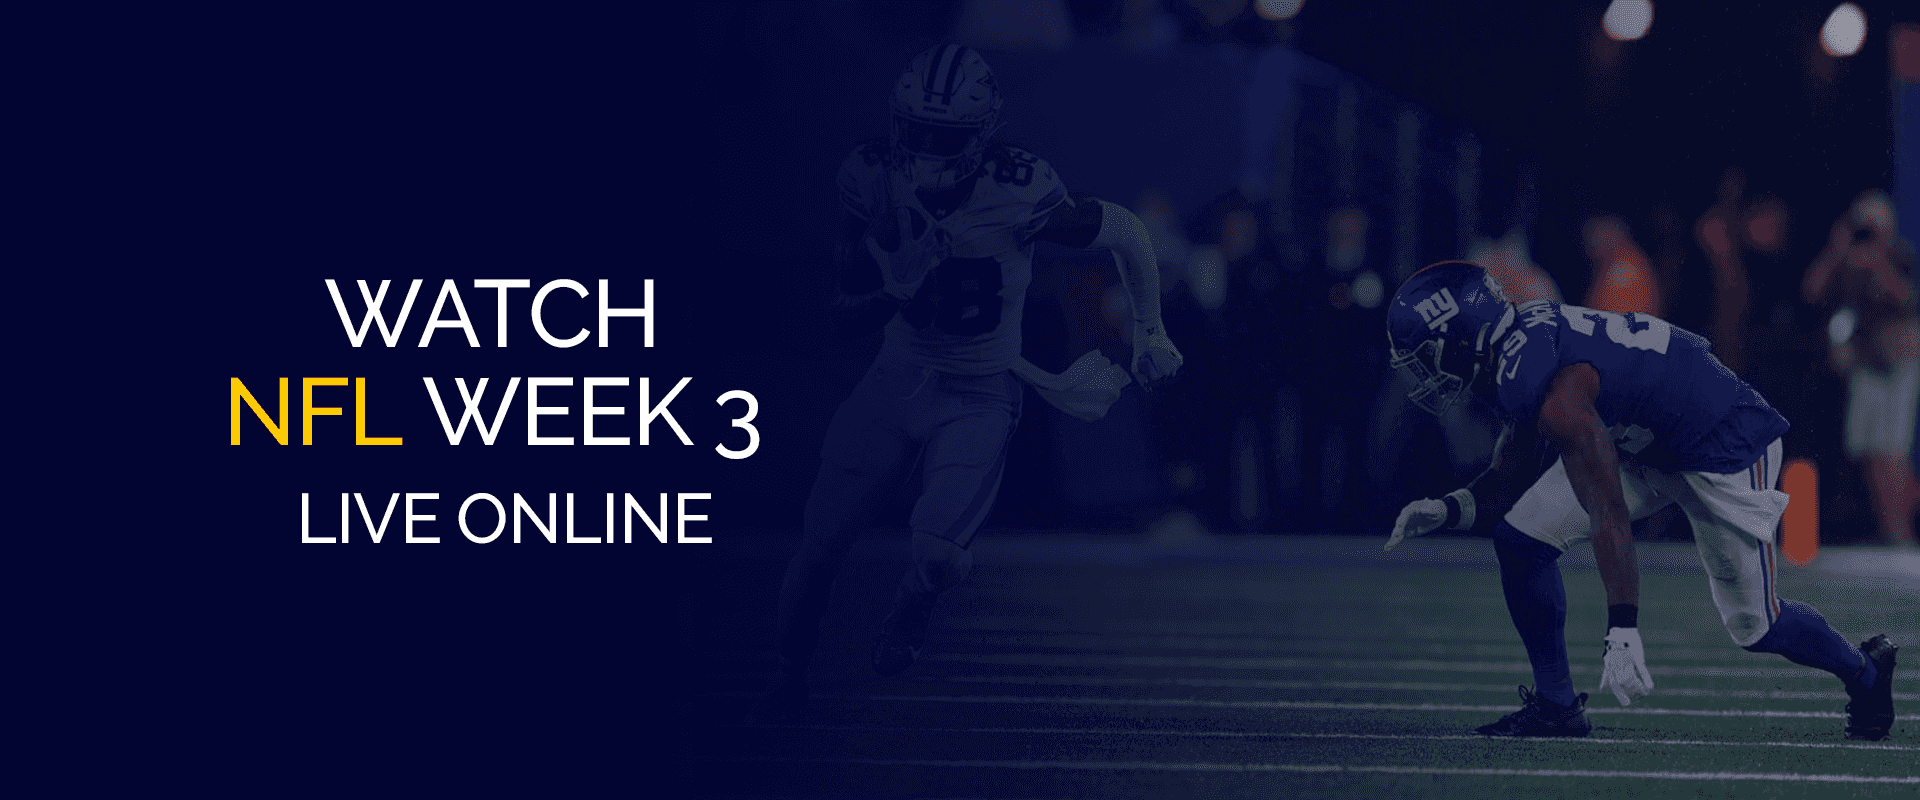 Watch NFL Week 3 Live Online